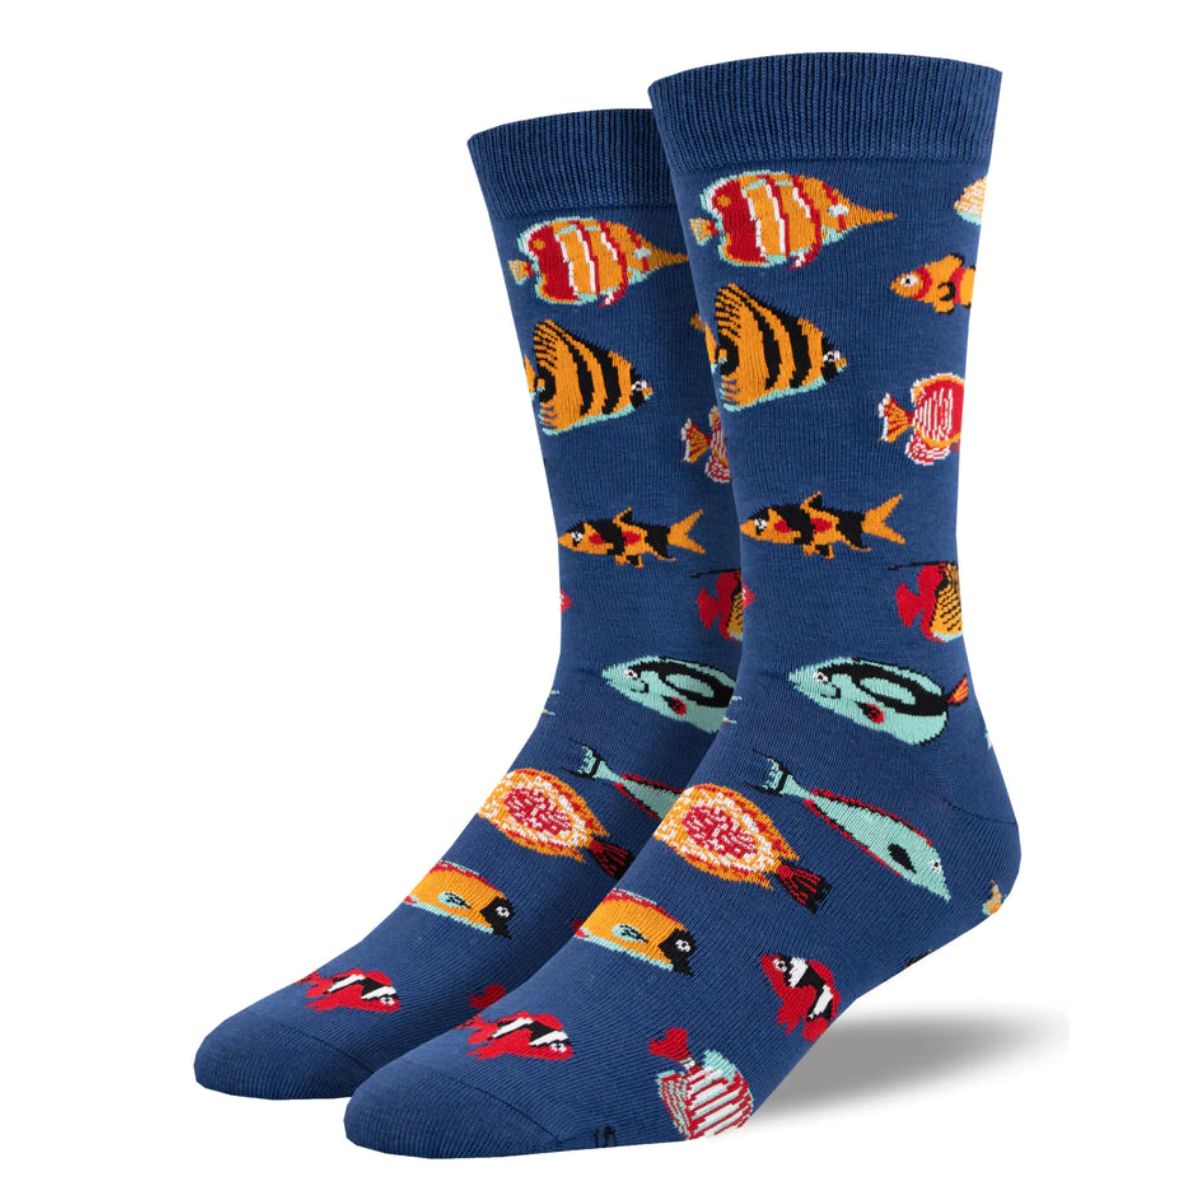 Tropical fish socks a pair of blue crew socks with tropical fish print